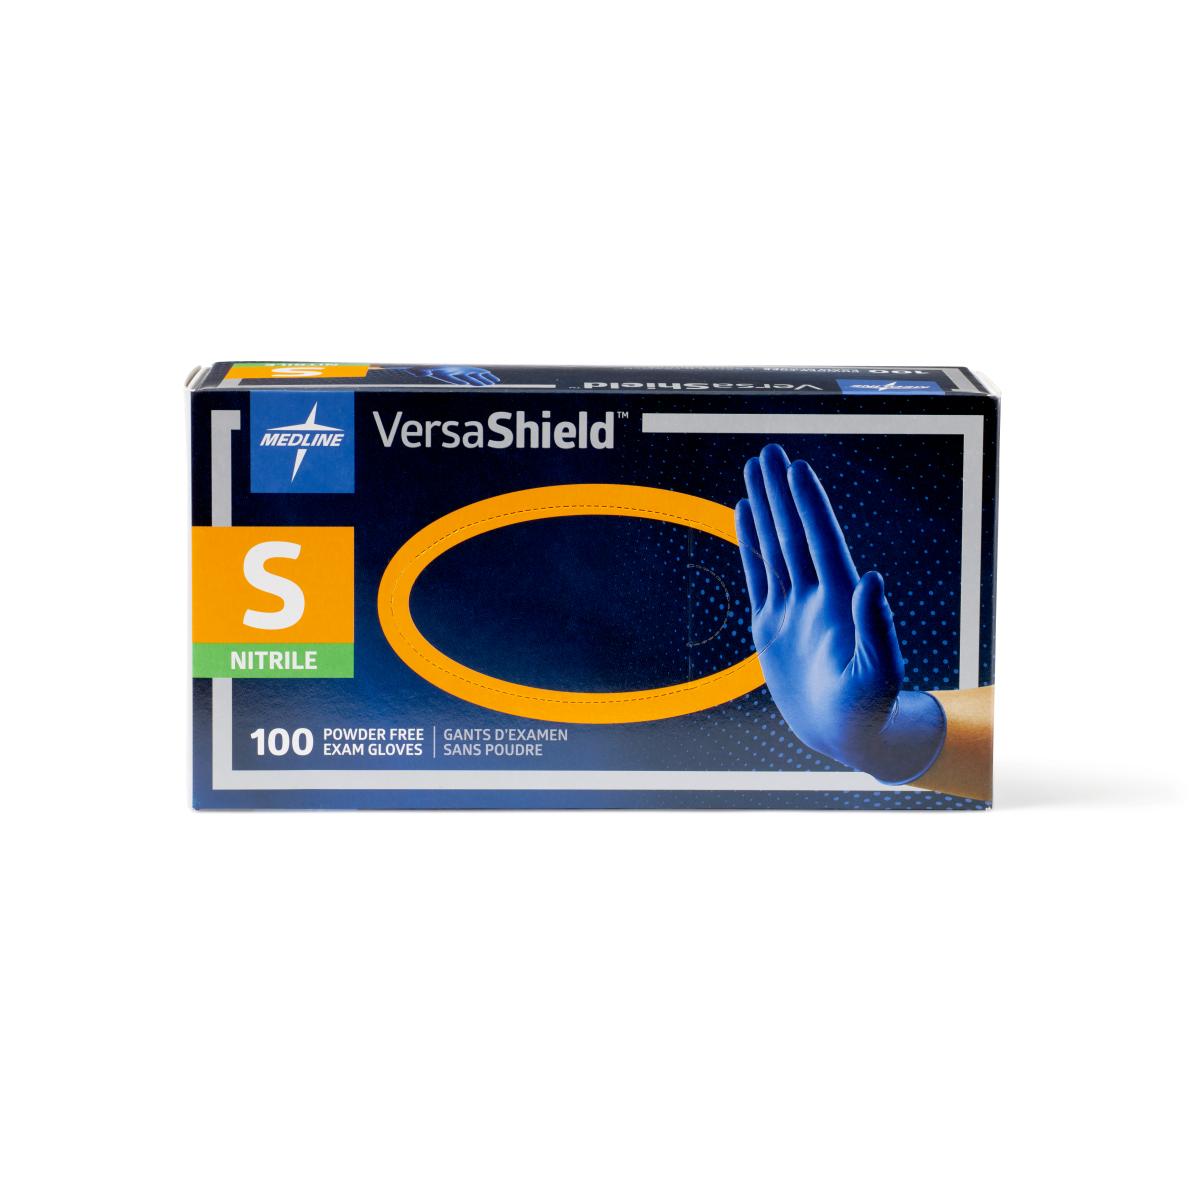 Versashield brand blue gloves in blue box - small size